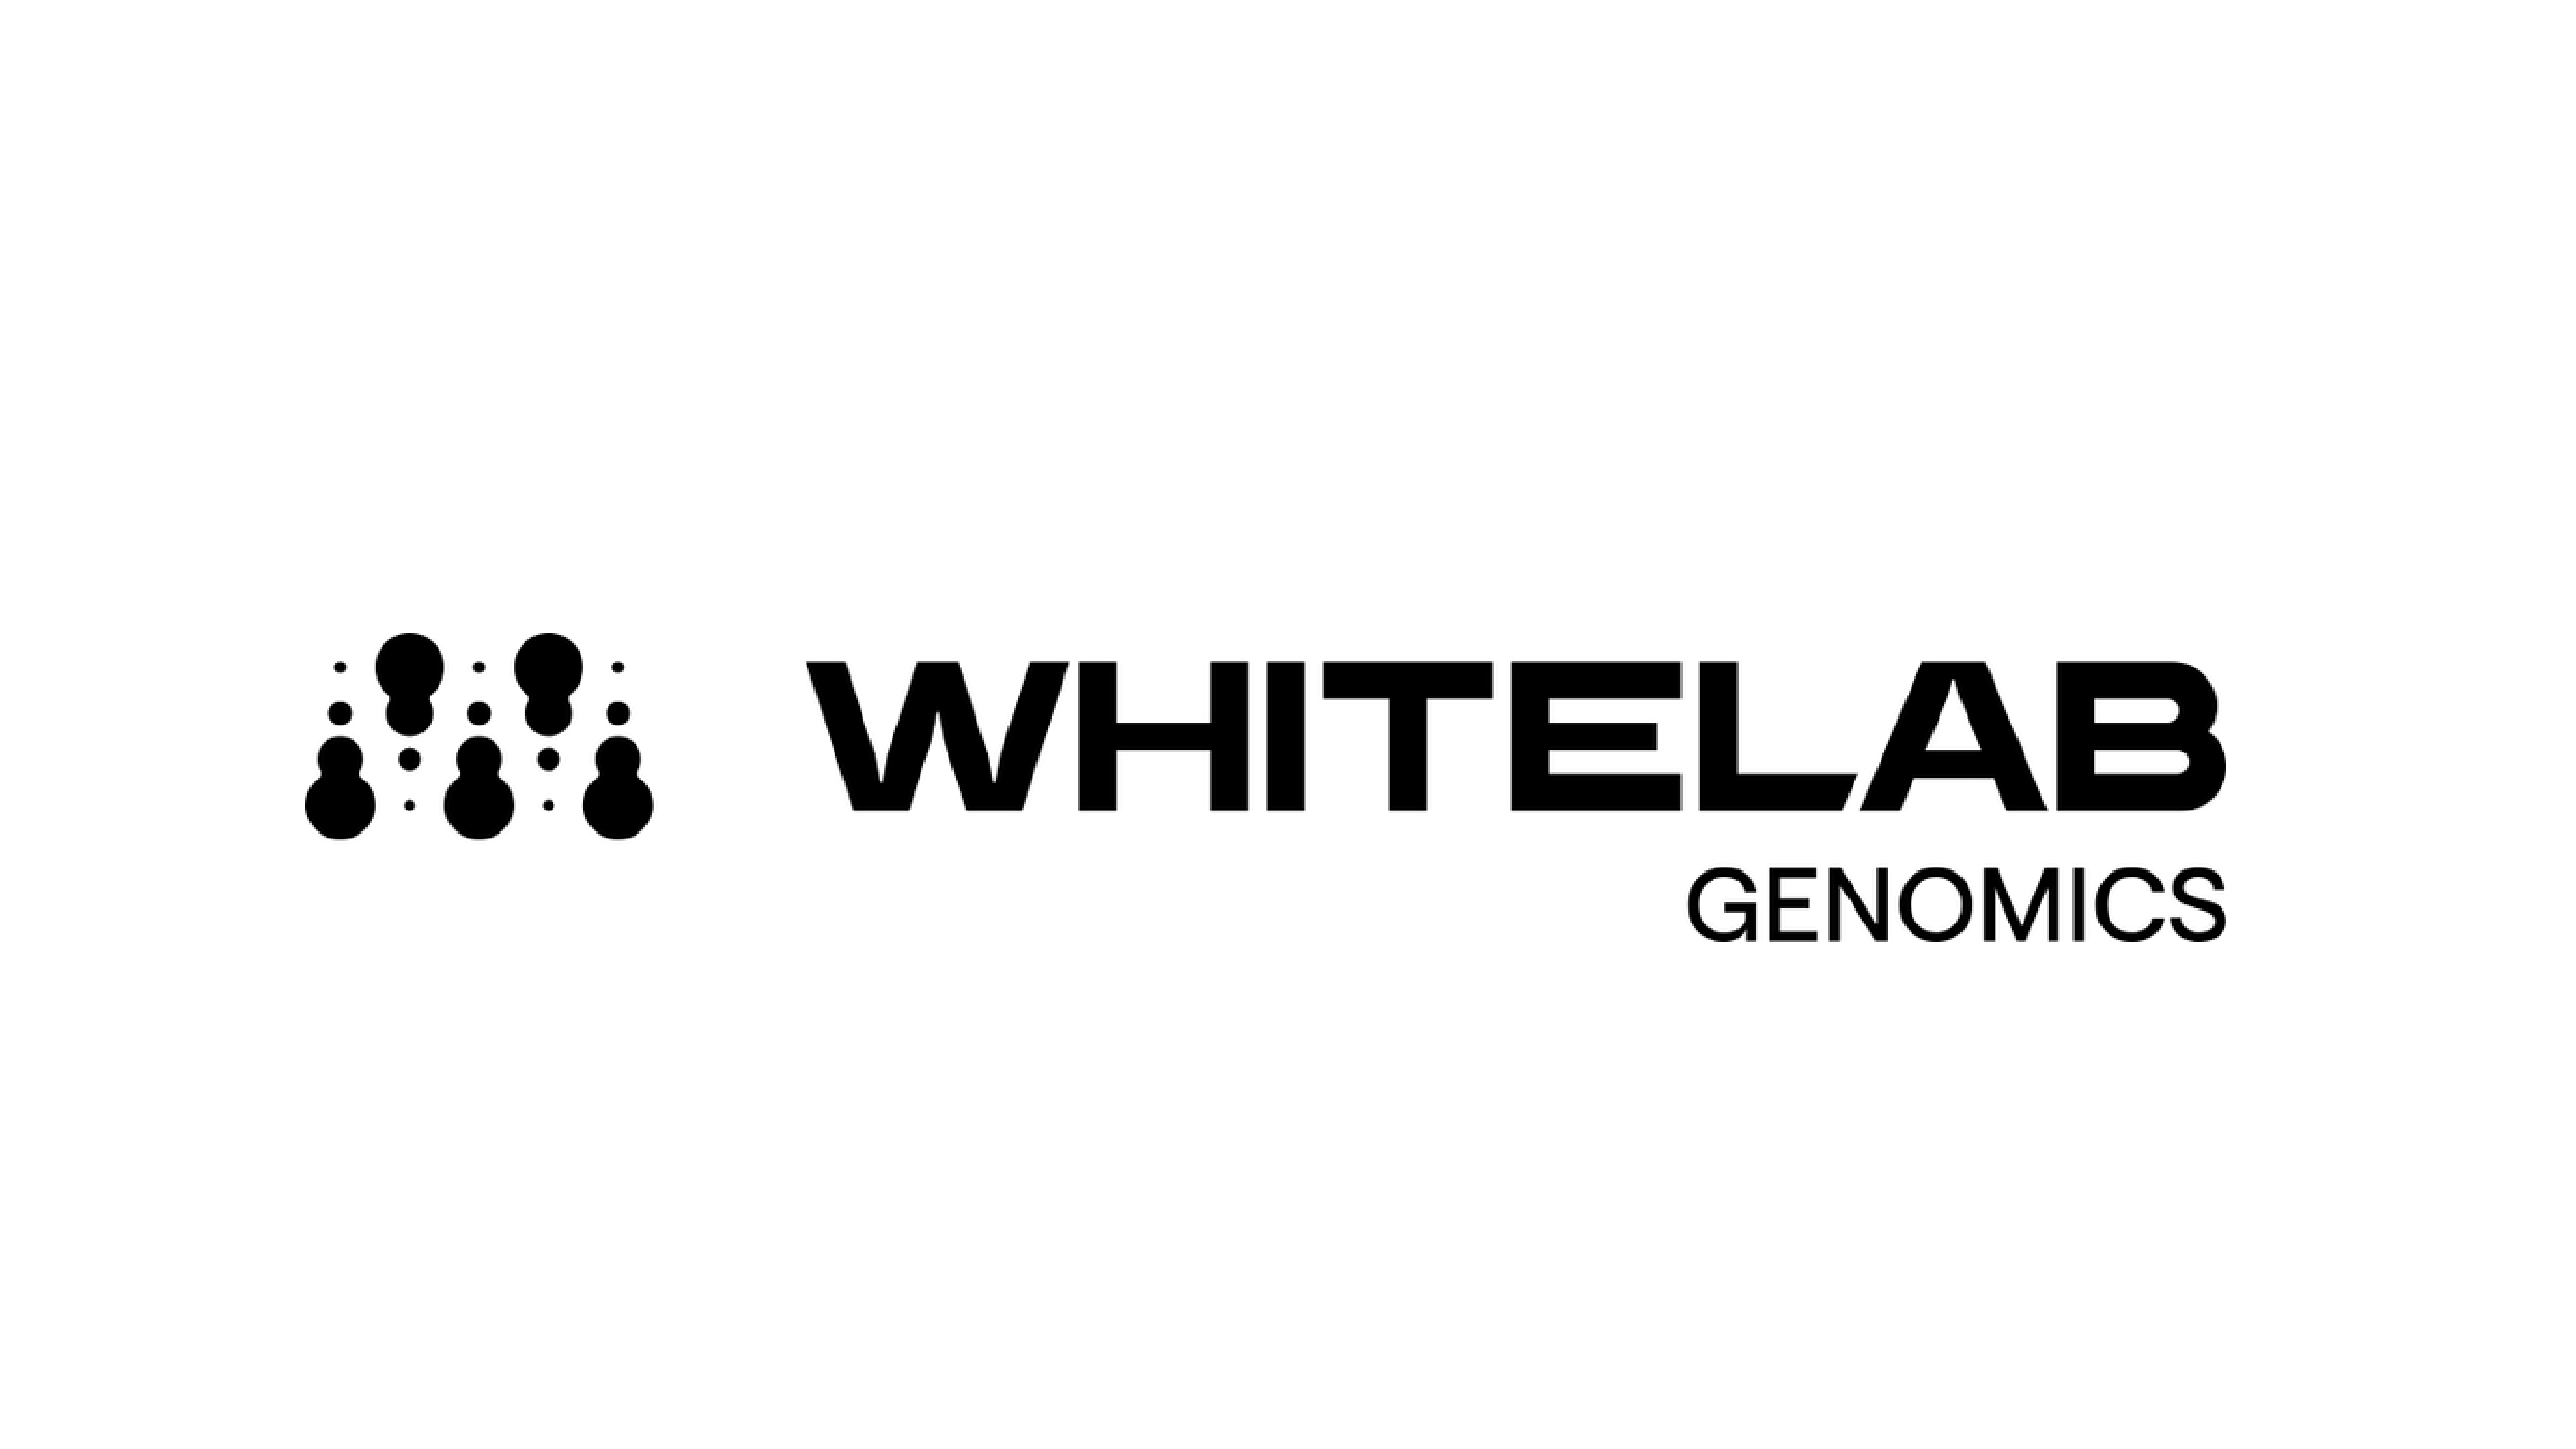 WhiteLab Genomics